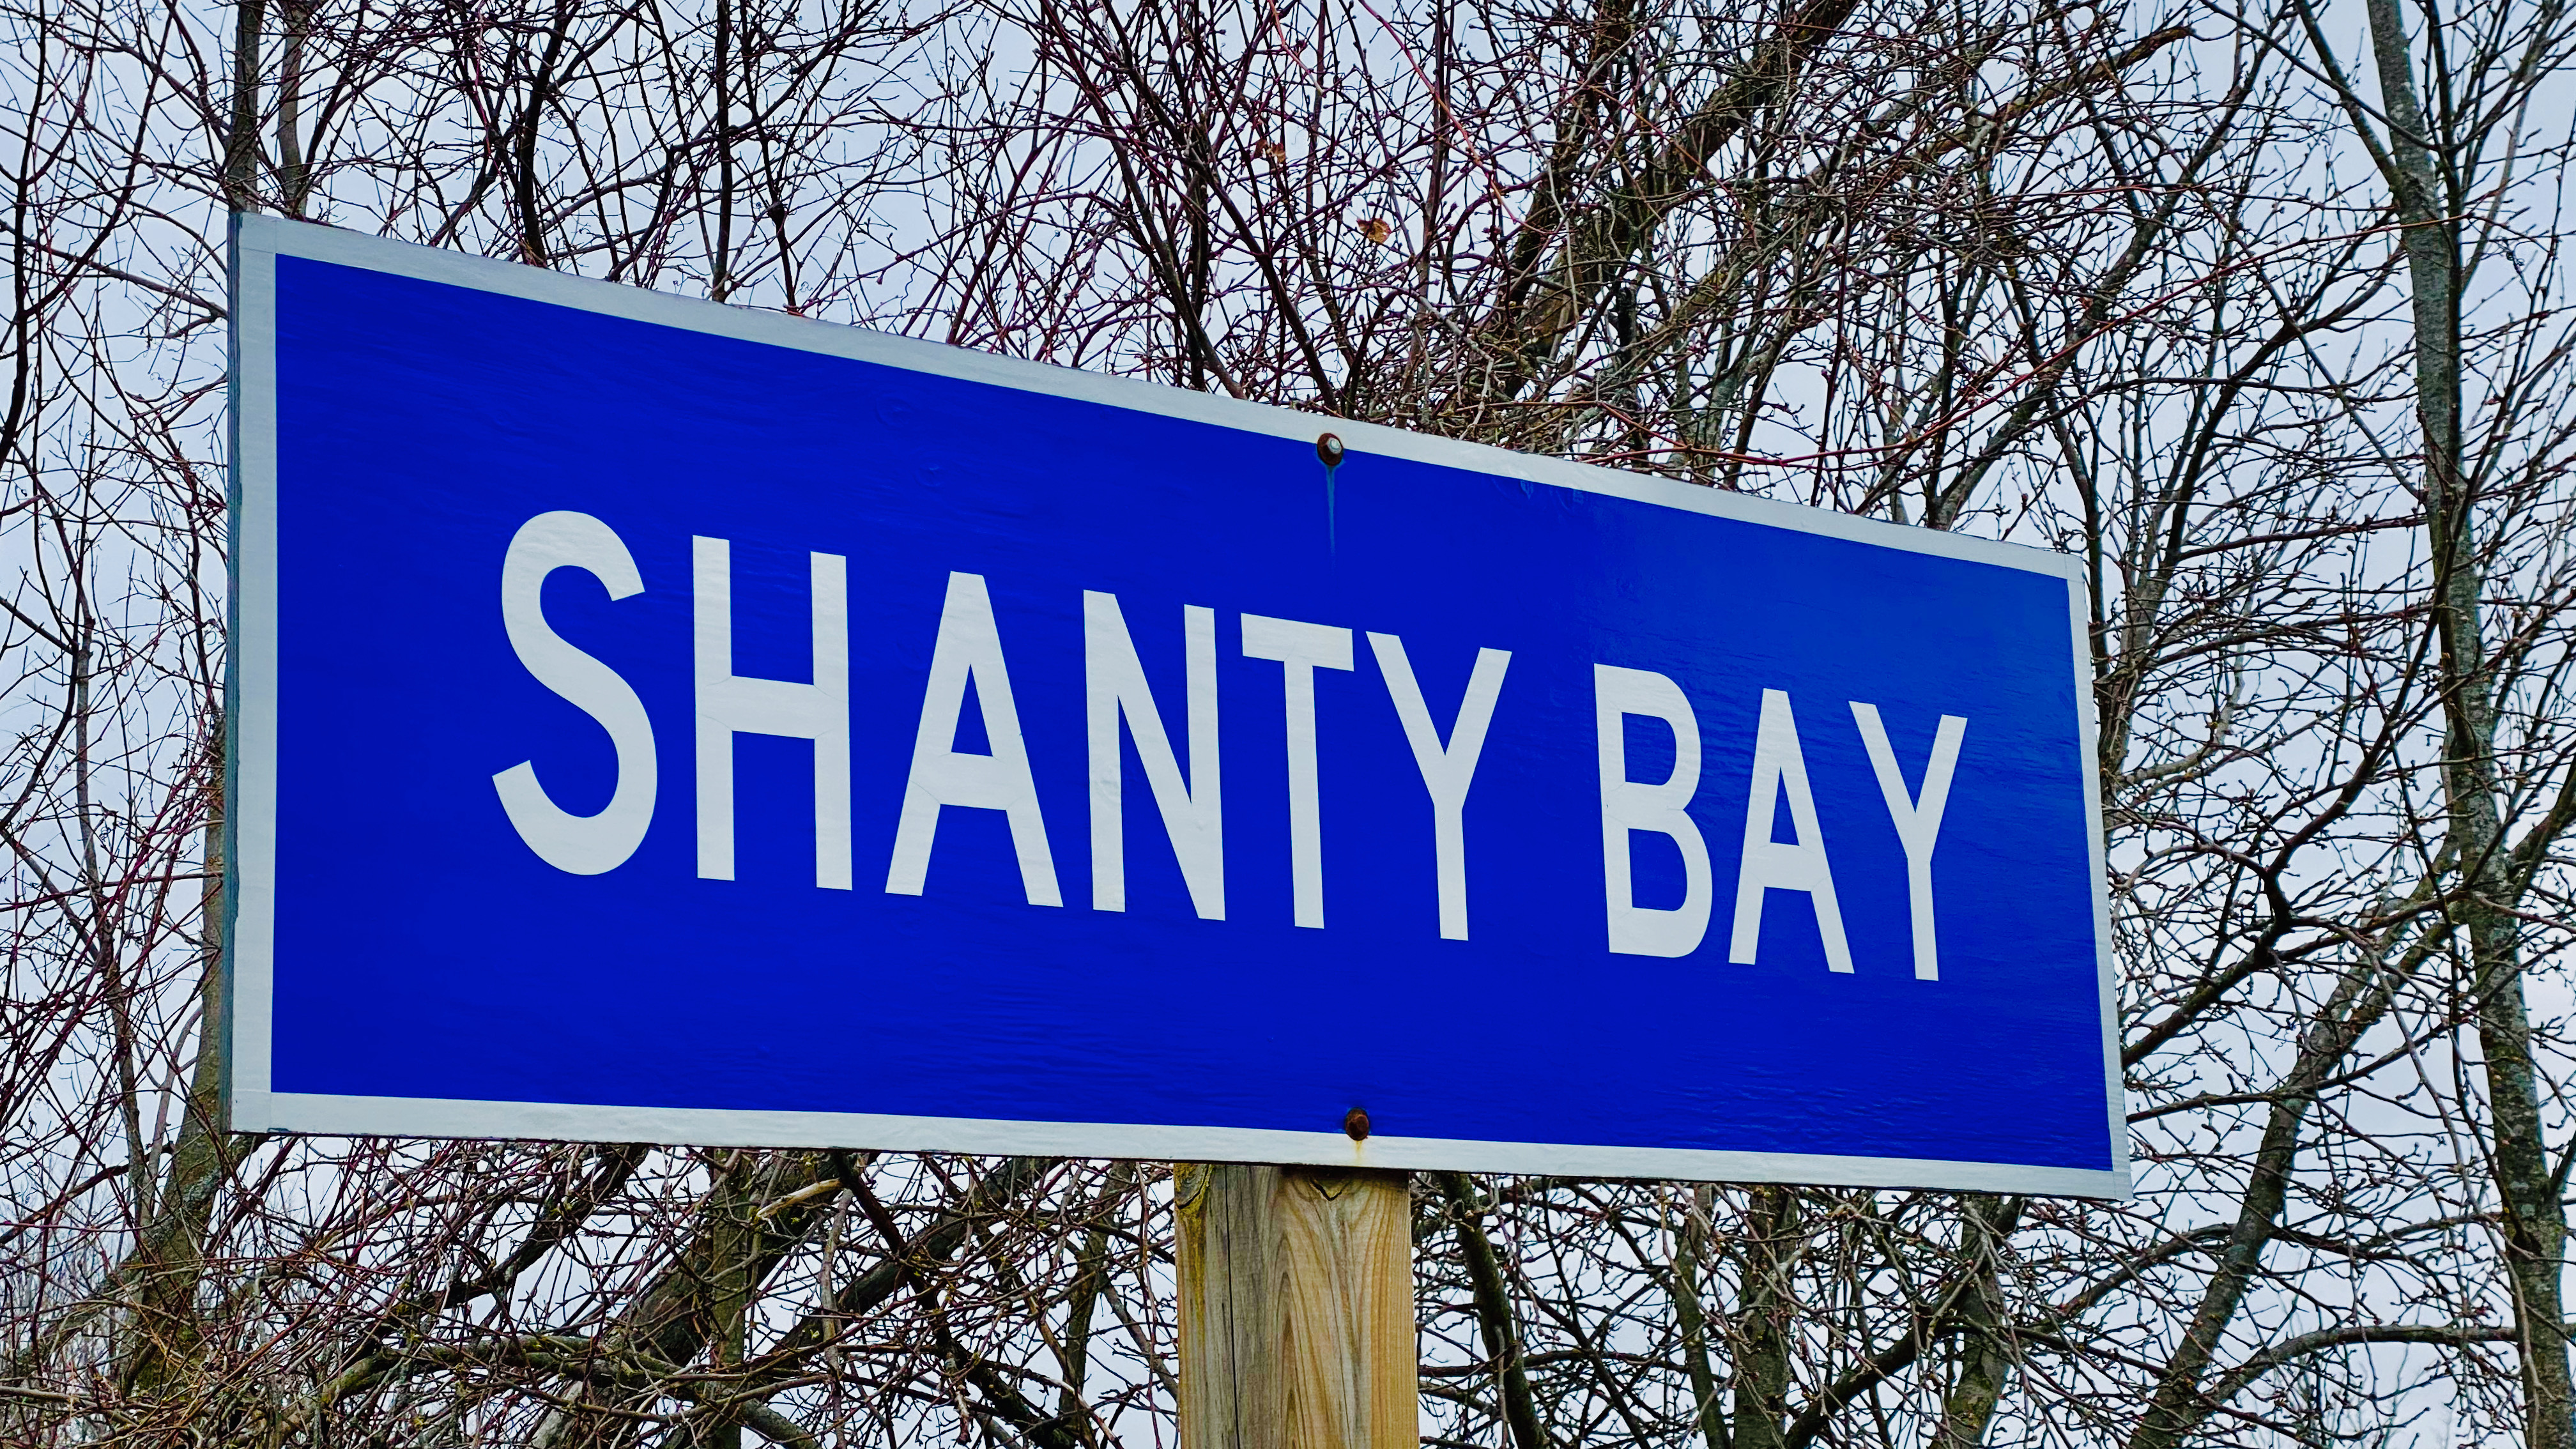 https://0901.nccdn.net/4_2/000/000/046/6ea/the-bay-photos-shanty-bay-sign---1.jpeg